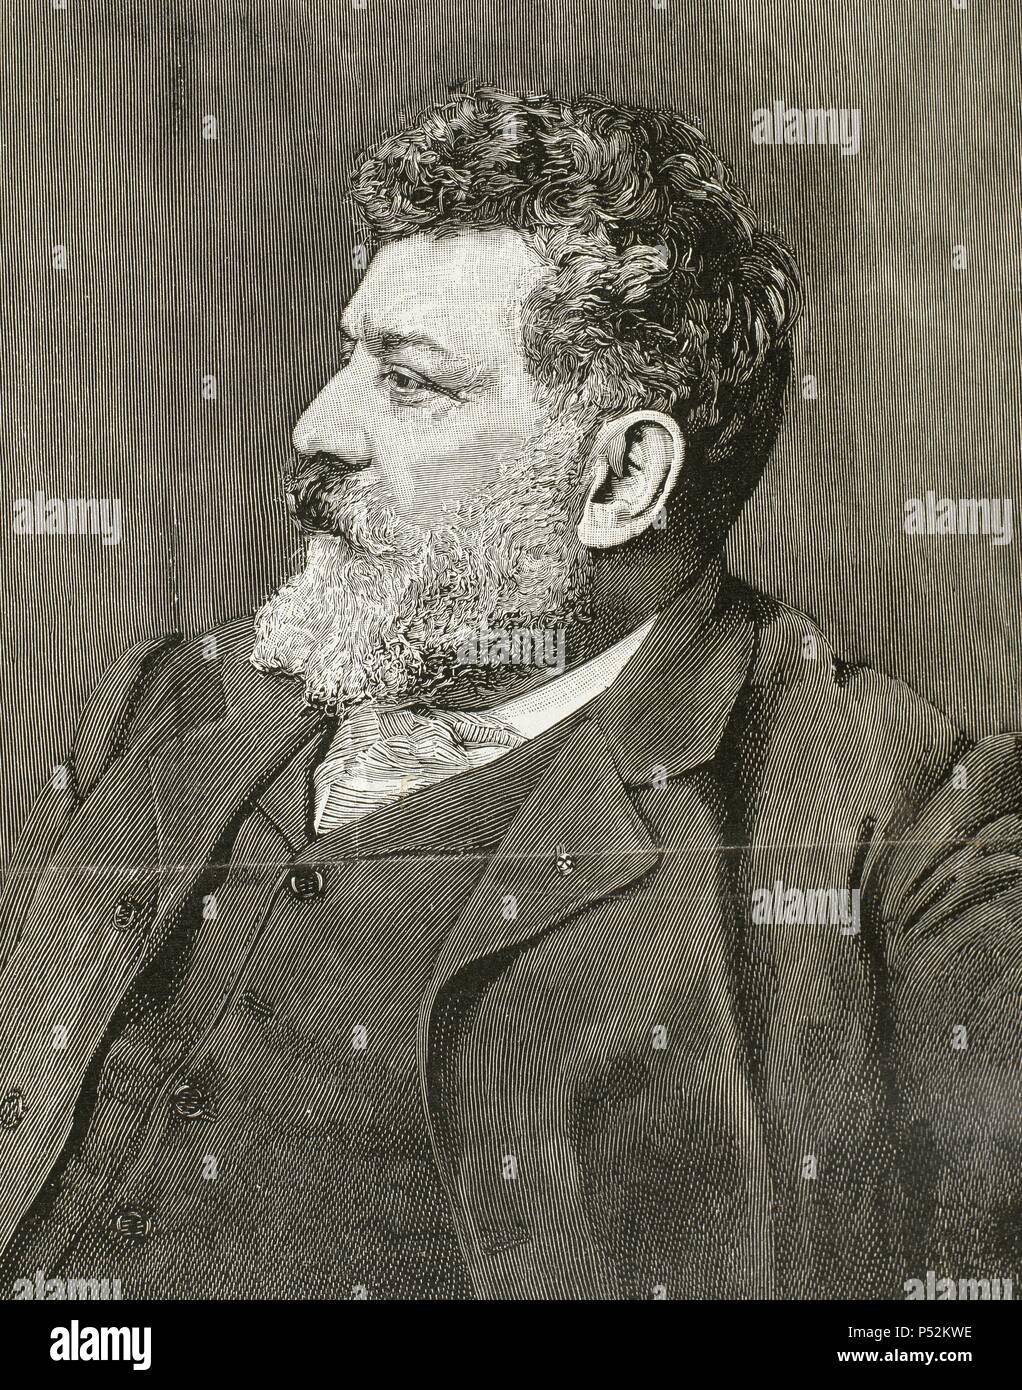 Francisco Domingo Marques (1842-1920). Spanish painter. Eclictic style. Portrait. Engraving. 19th century. Stock Photo